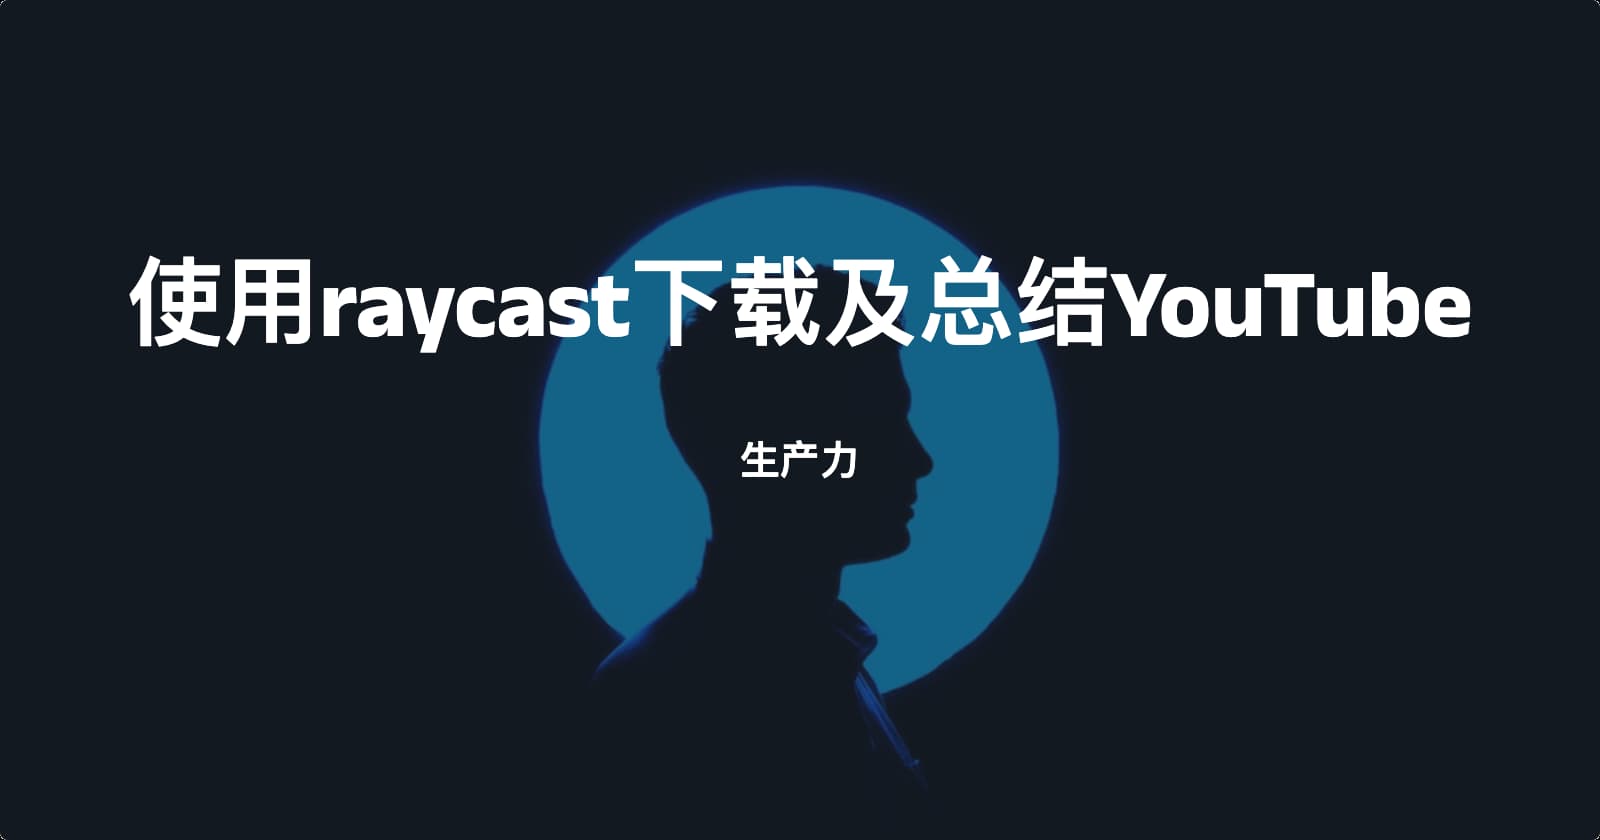 使用raycast下载YouTube及AI总结YouTube视频